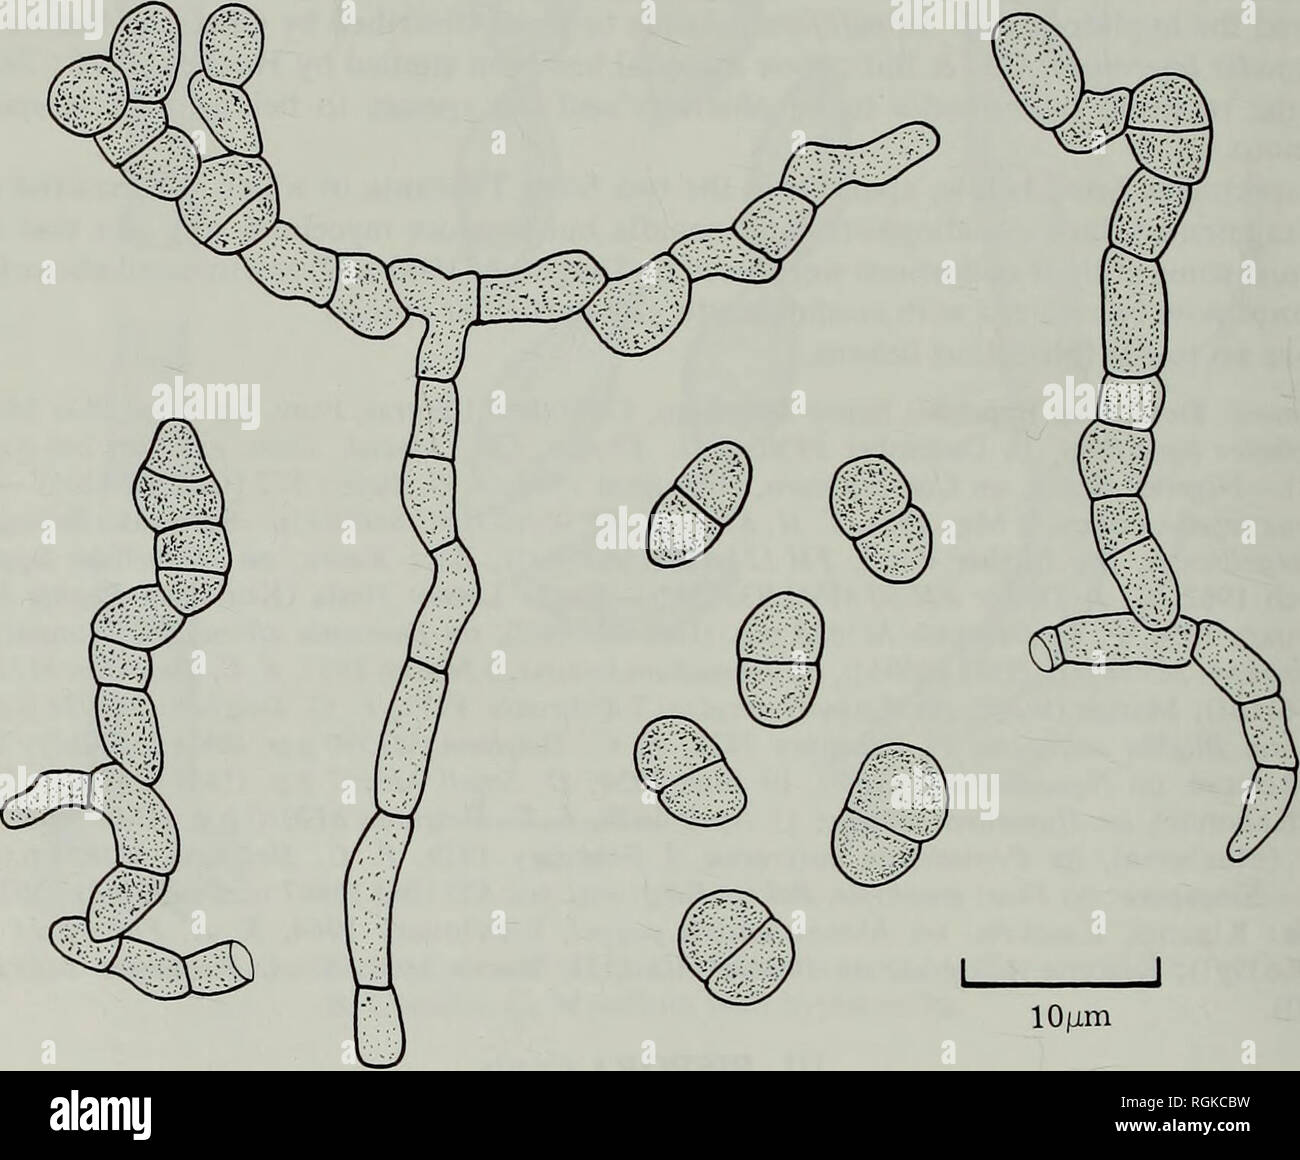 . Bulletin of the British Museum (Natural History) Botany. 208 D. L. HAWKSWORTH pallide brunnea, levia, 15-35 x2-5-4 fj.m. Cellulae conidiogenae monoblasticae, integratae, subcylin- dricae. Conidia catenata, sicca, acrogena, ellipsoidea vel doliiformia, 1-septata, levia, pallidissime brunnea, 5-8(-9) x4-6(-7) ^.m. Typus: Dania, Sjaelland, Vridsl0selille, in Candelariella vitellina (HofTm.) Mull. Arg. (apothecia) ad lignum, 20.vii.1944, M. Skytte Christiansen 11.704 (hb. Christiansen 552—holotypus!). Exsiccatae: Rasanen, Lich. Fenn. no. 347 p.p. (BM!, IMI 228050!, hb. Christiansen; sub Didymocy Stock Photo